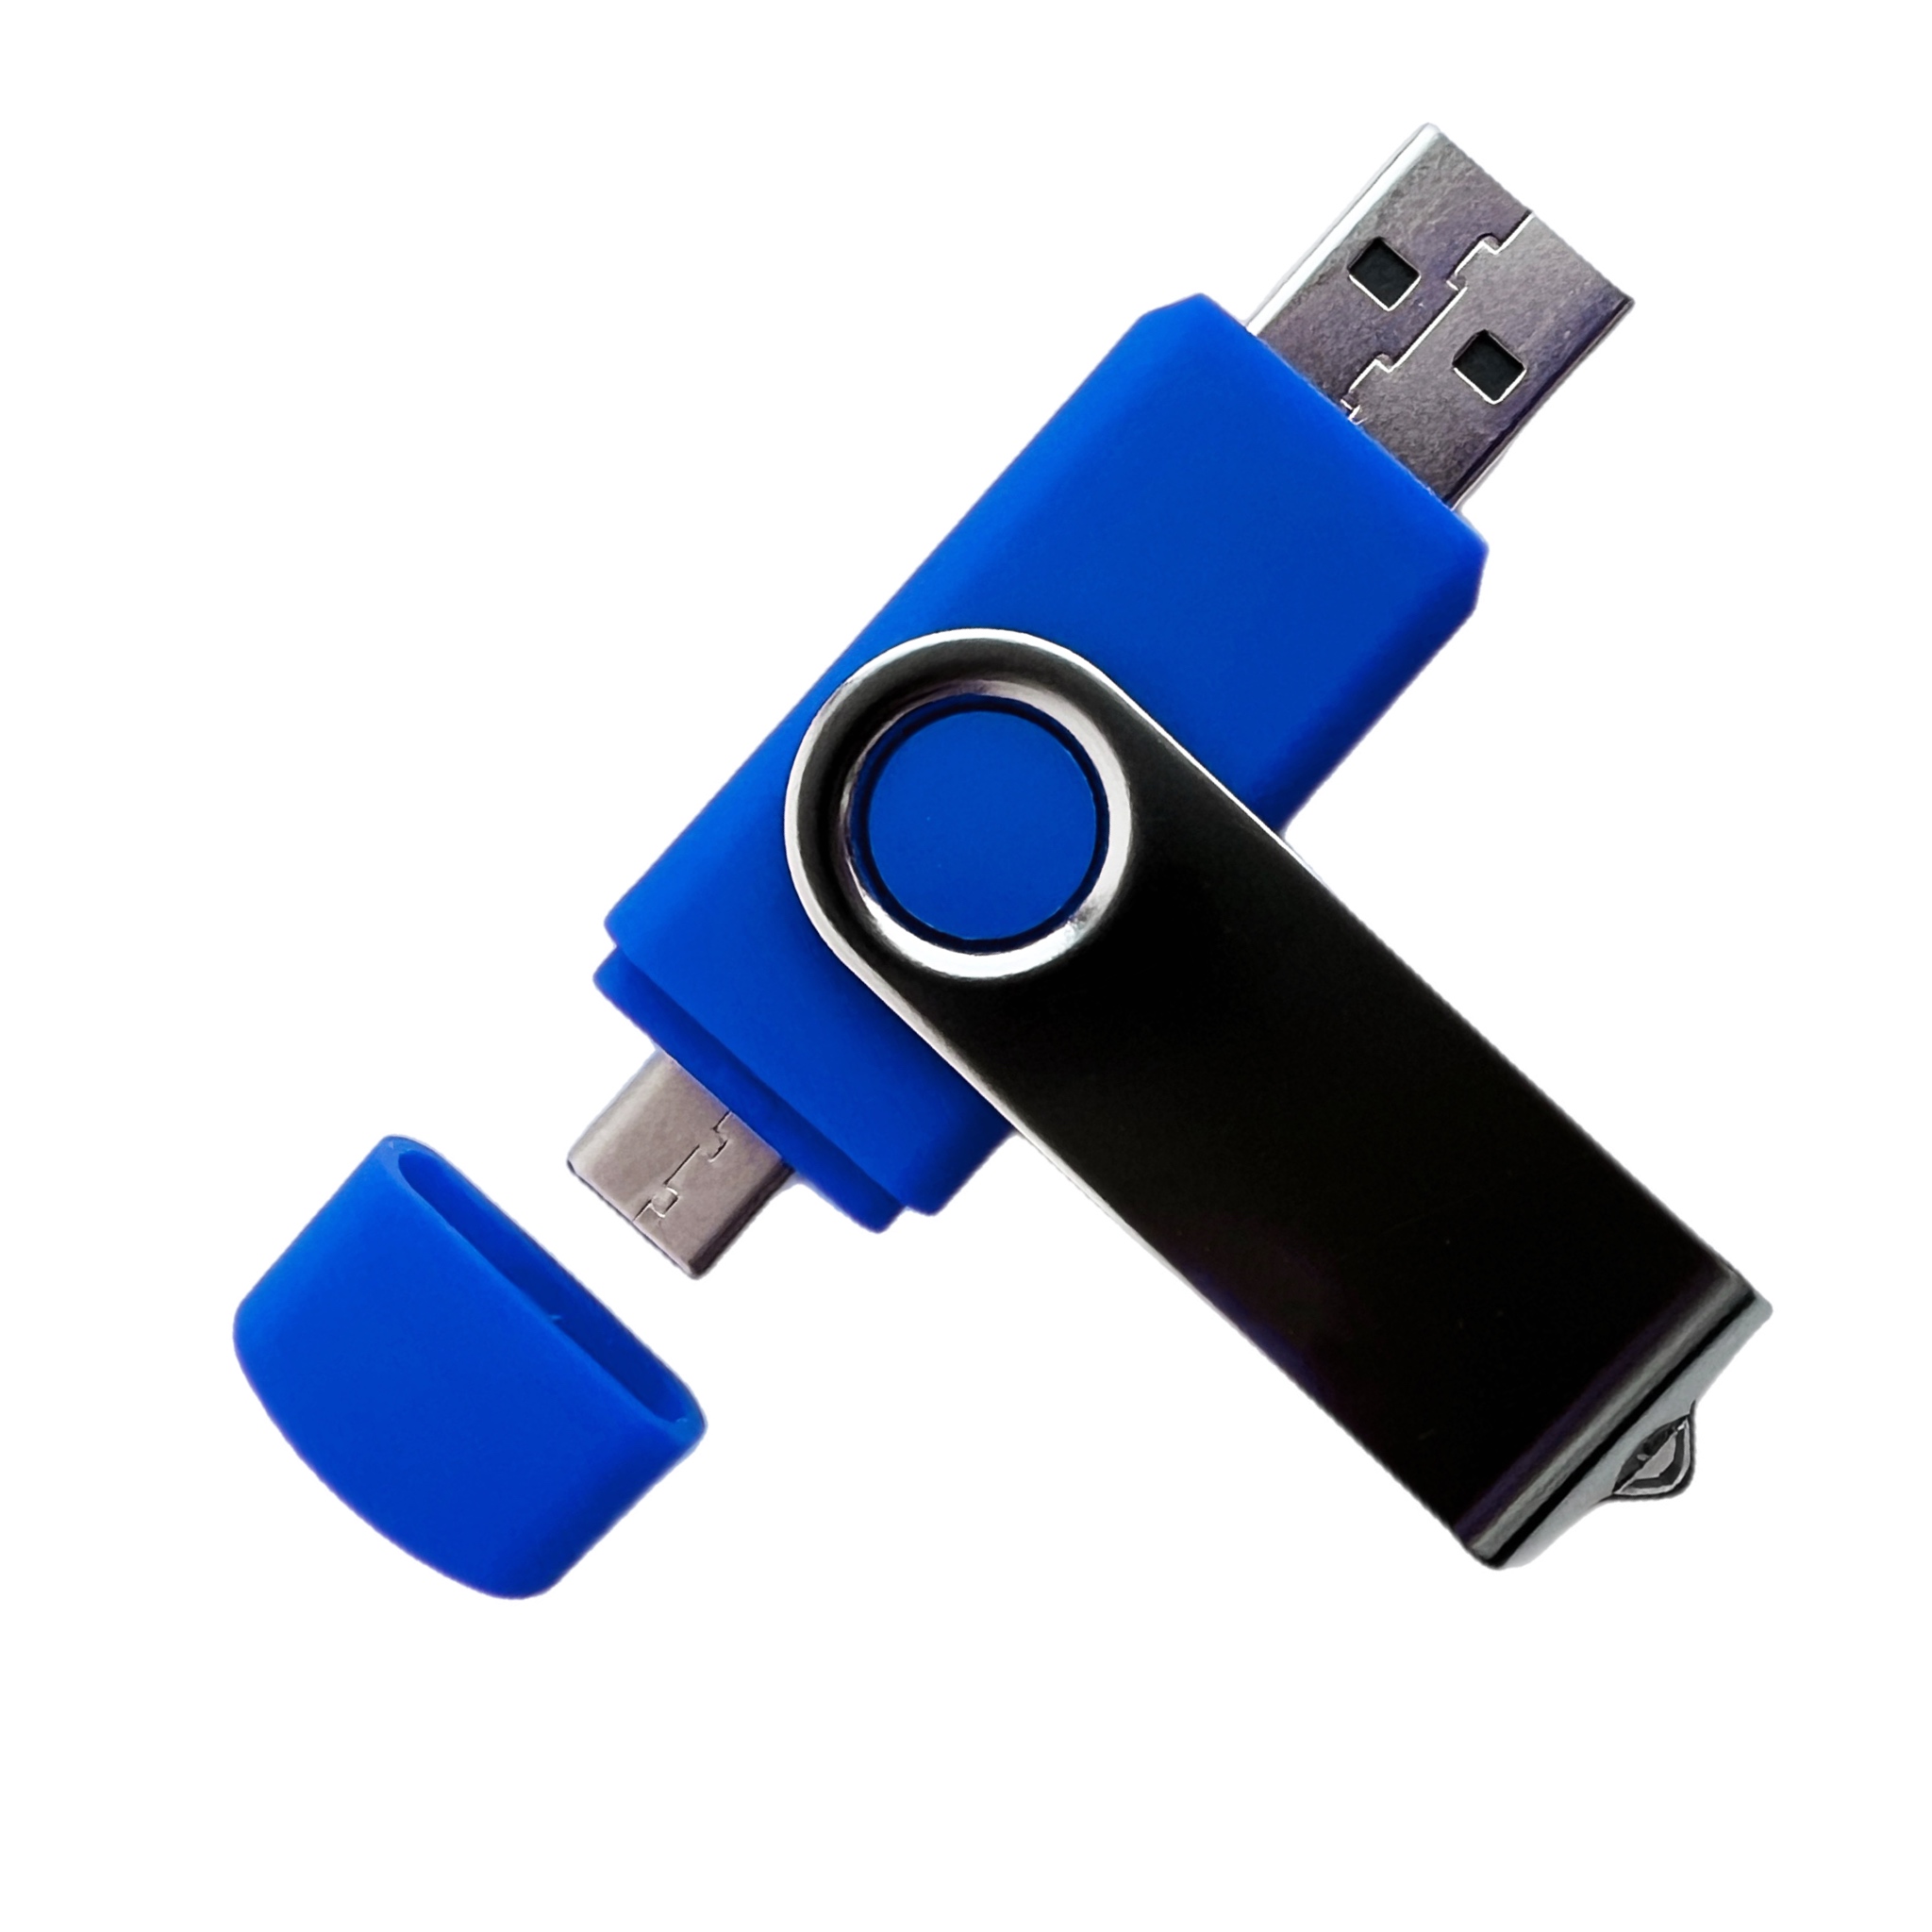 USB-флешка модель 104 OTG Type-C (3.0), объем памяти 32 GB, цвет синий